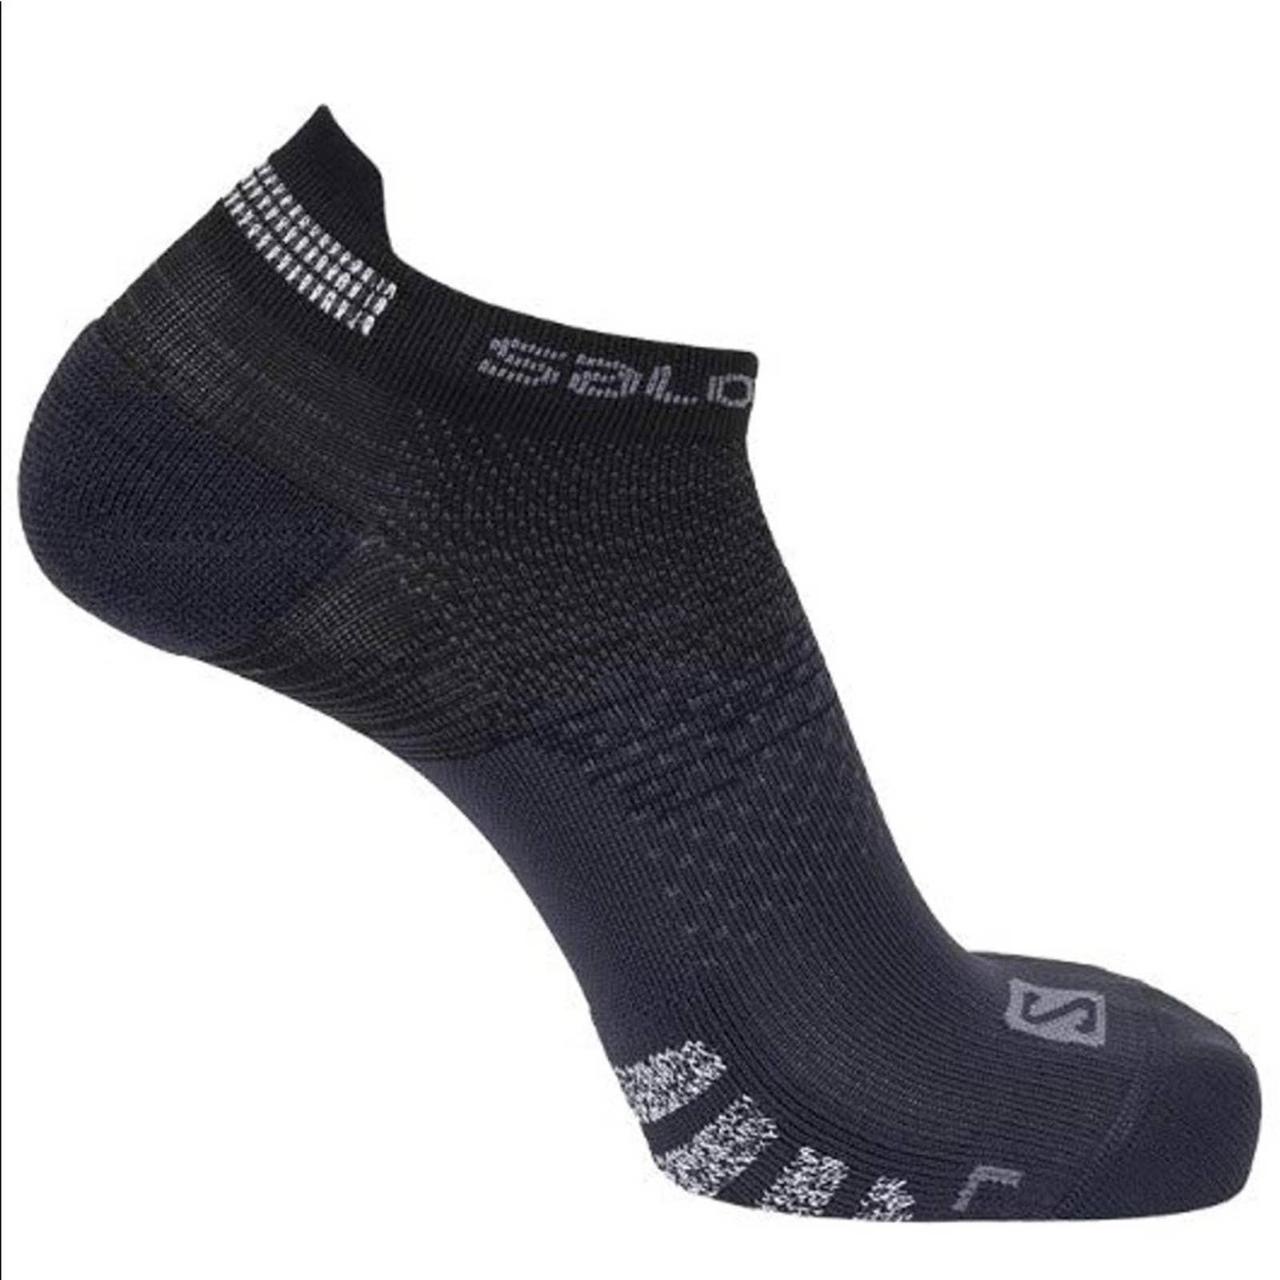 Product Image 1 - Salomon Standard Socks, Ebony/Quiet Shade